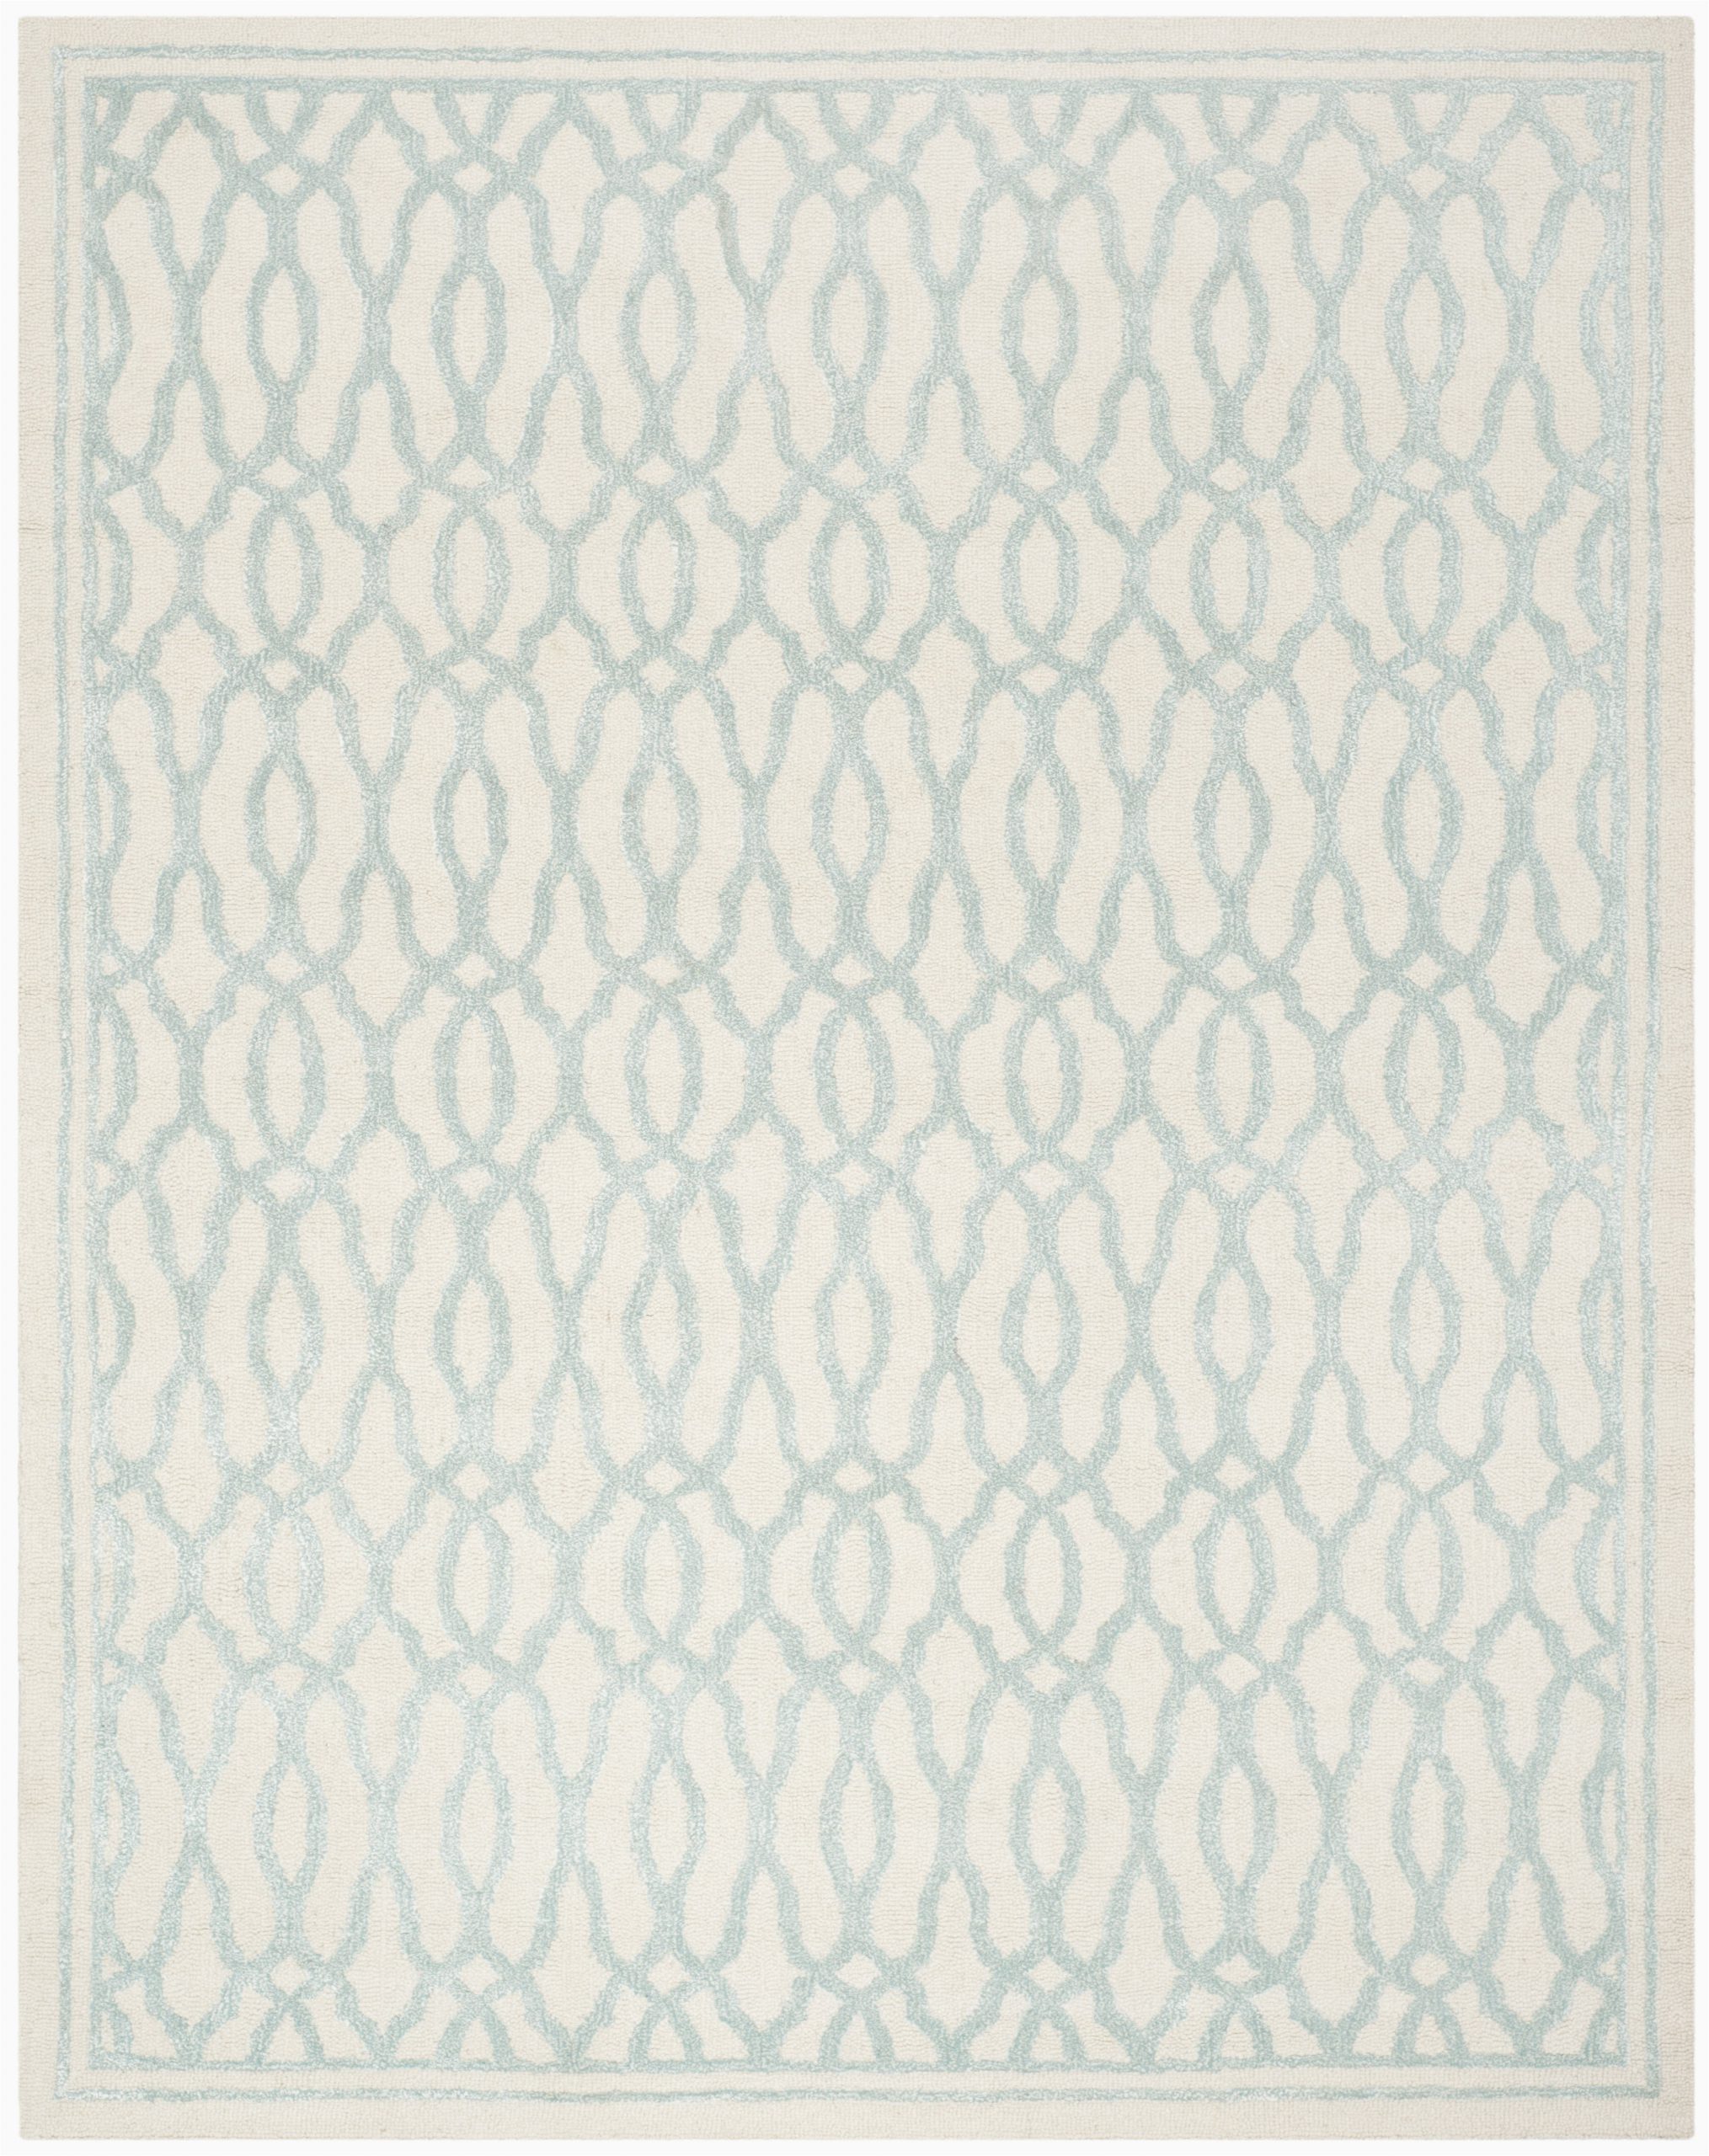 martha stewart hand tufted ivoryteal blue area rug